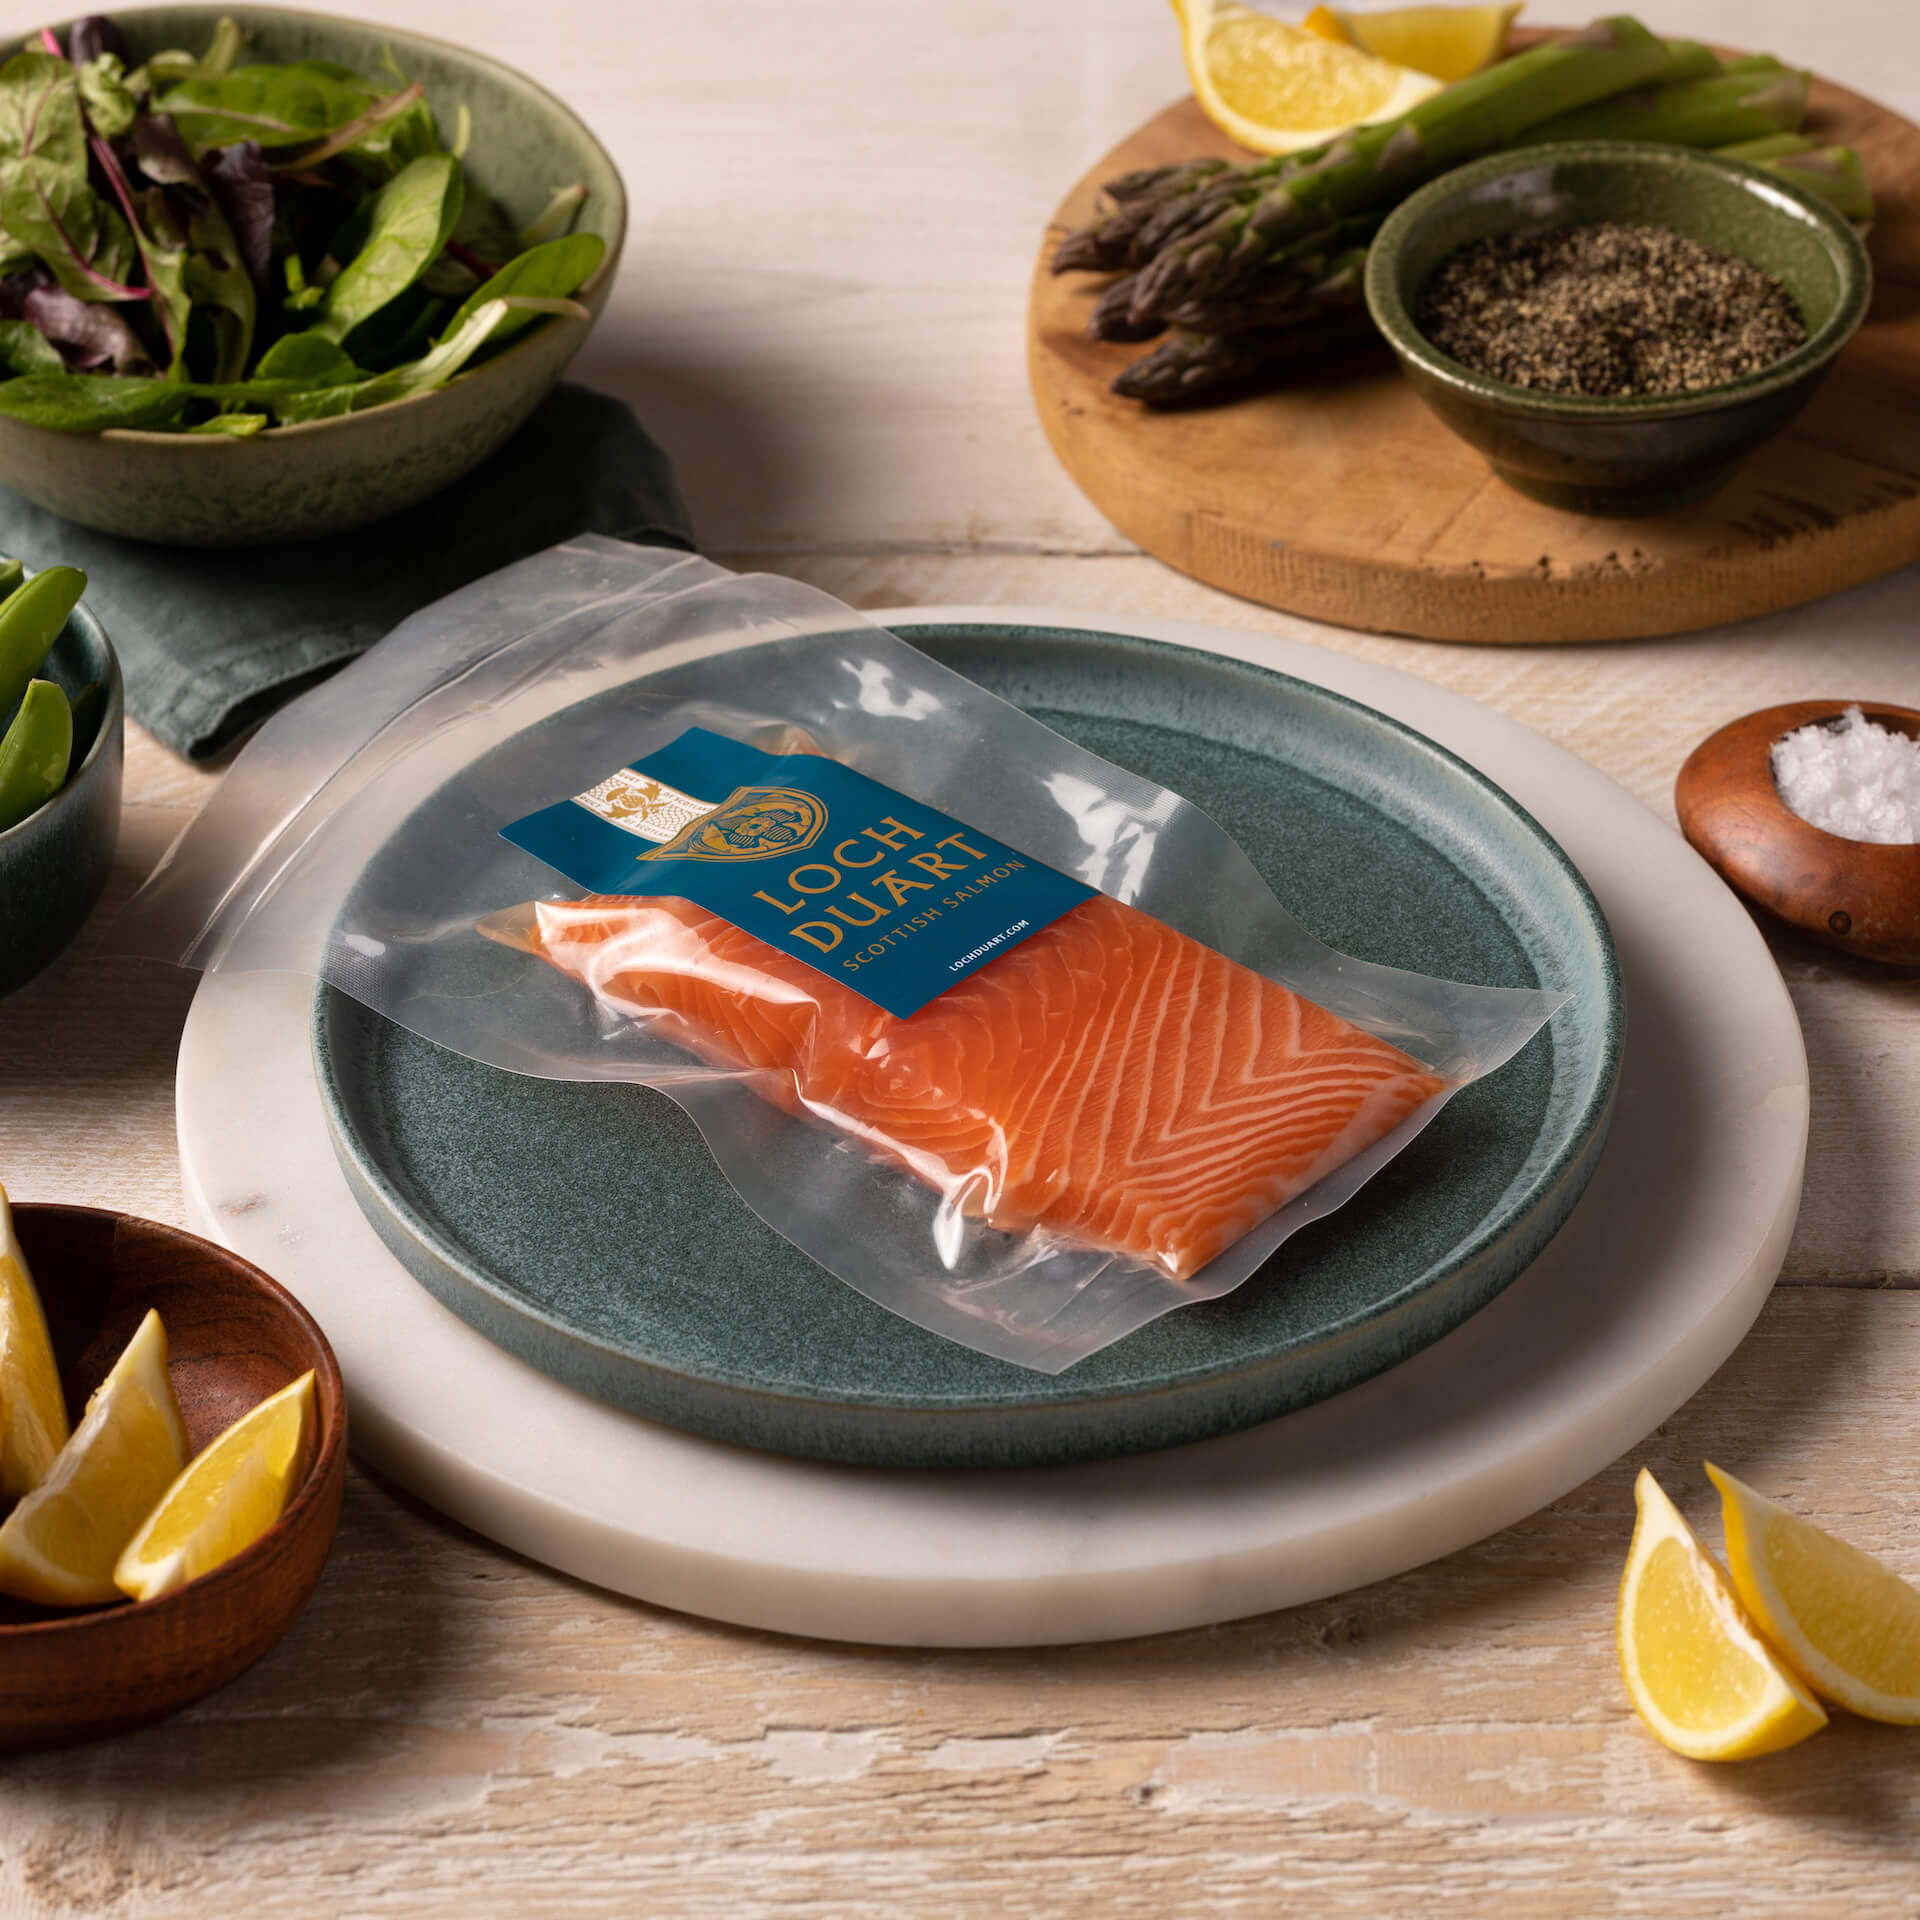 Loch Duart brings restaurant quality salmon to UK homes